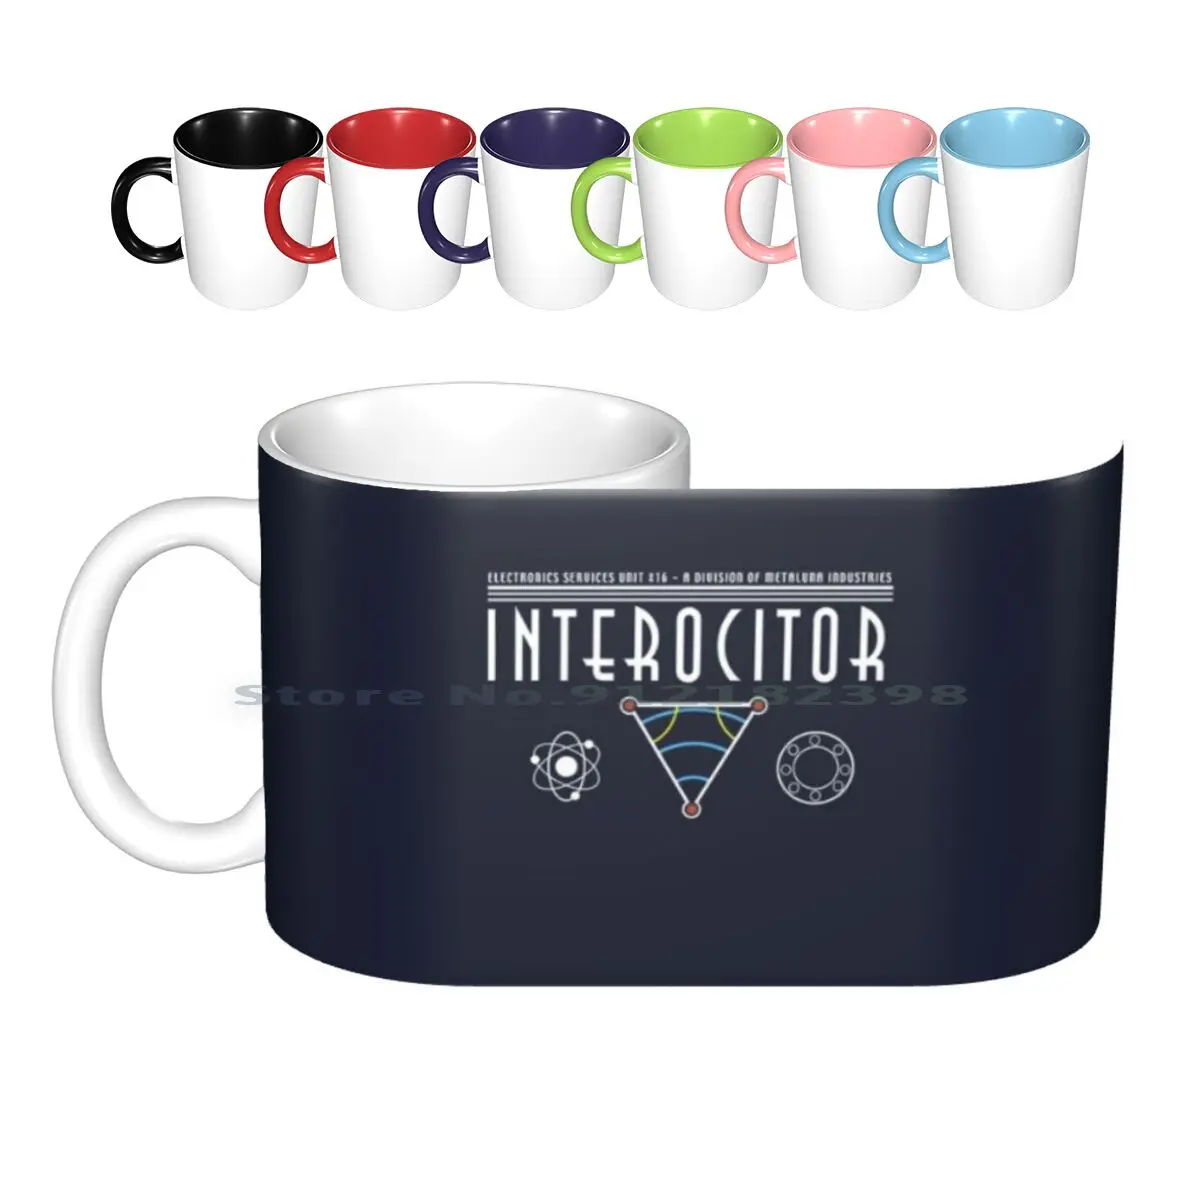 

Interocitor Logo : Inspired By The This Island Earth Ceramic Mugs Coffee Cups Milk Tea Mug 50s B Movie Scifi Science Fiction